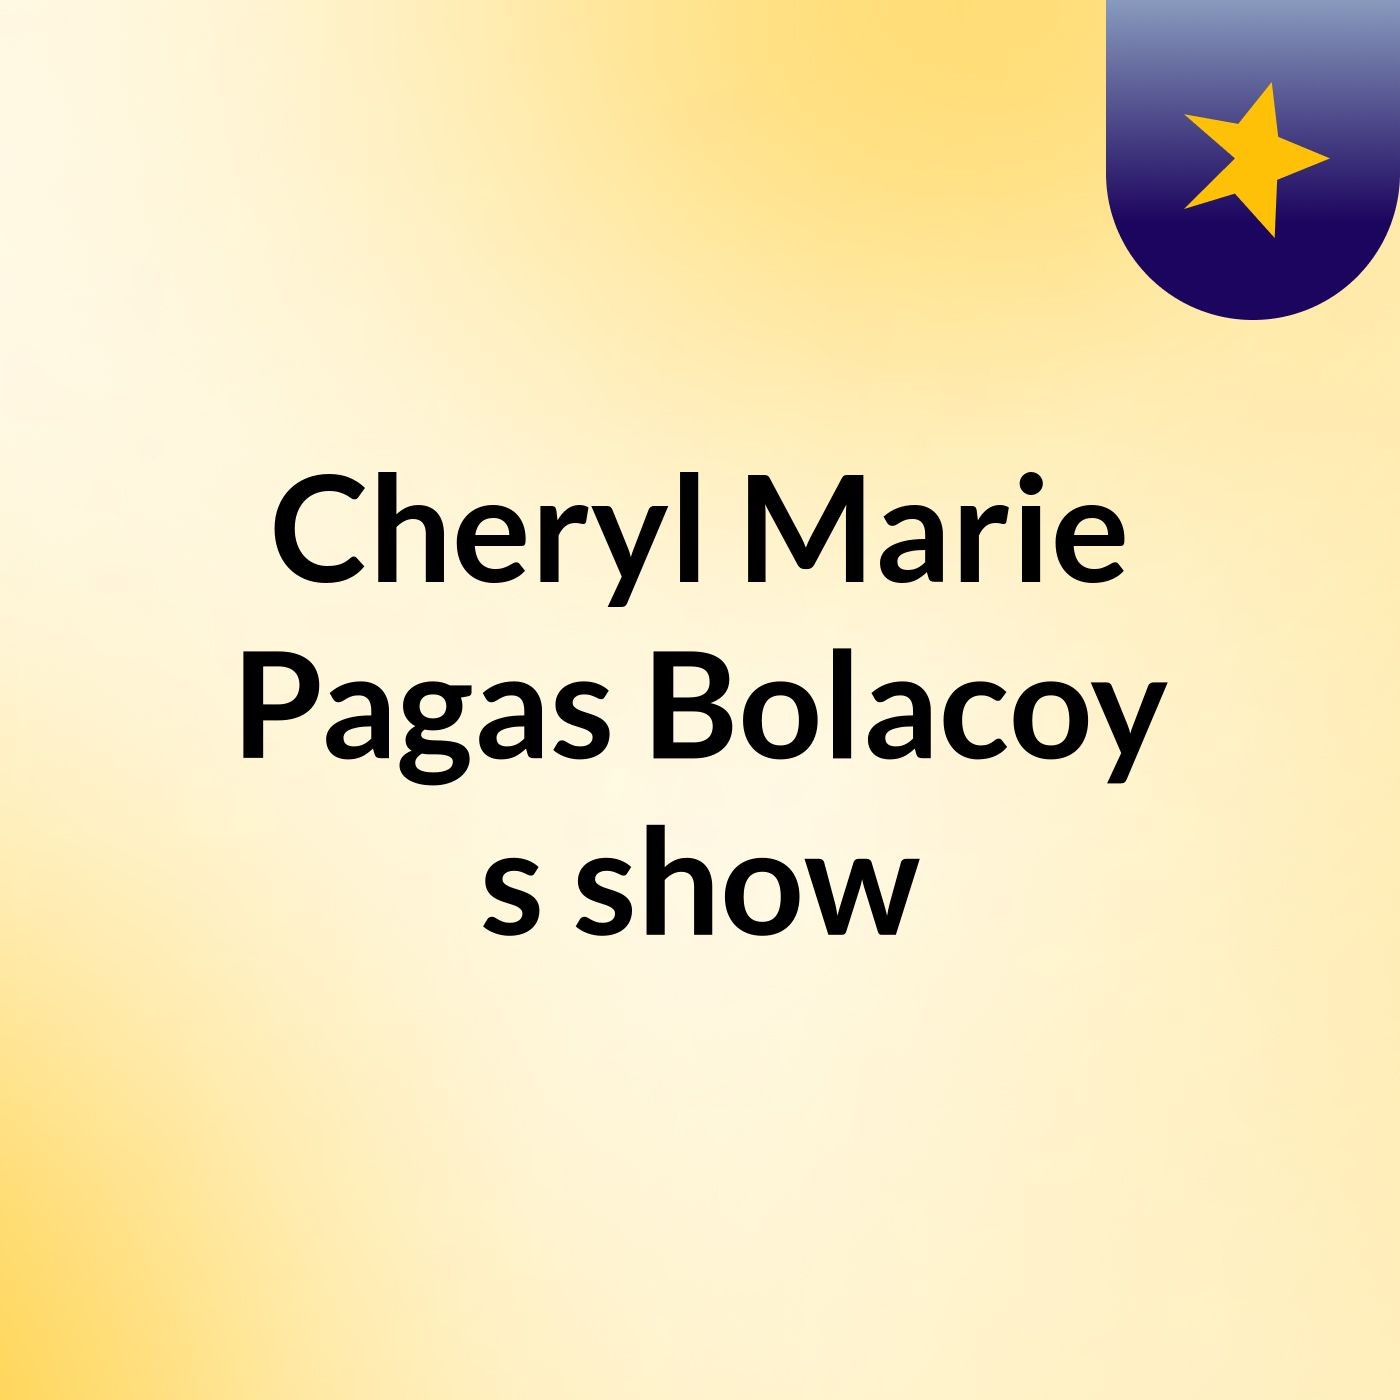 Cheryl Marie Pagas Bolacoy's show